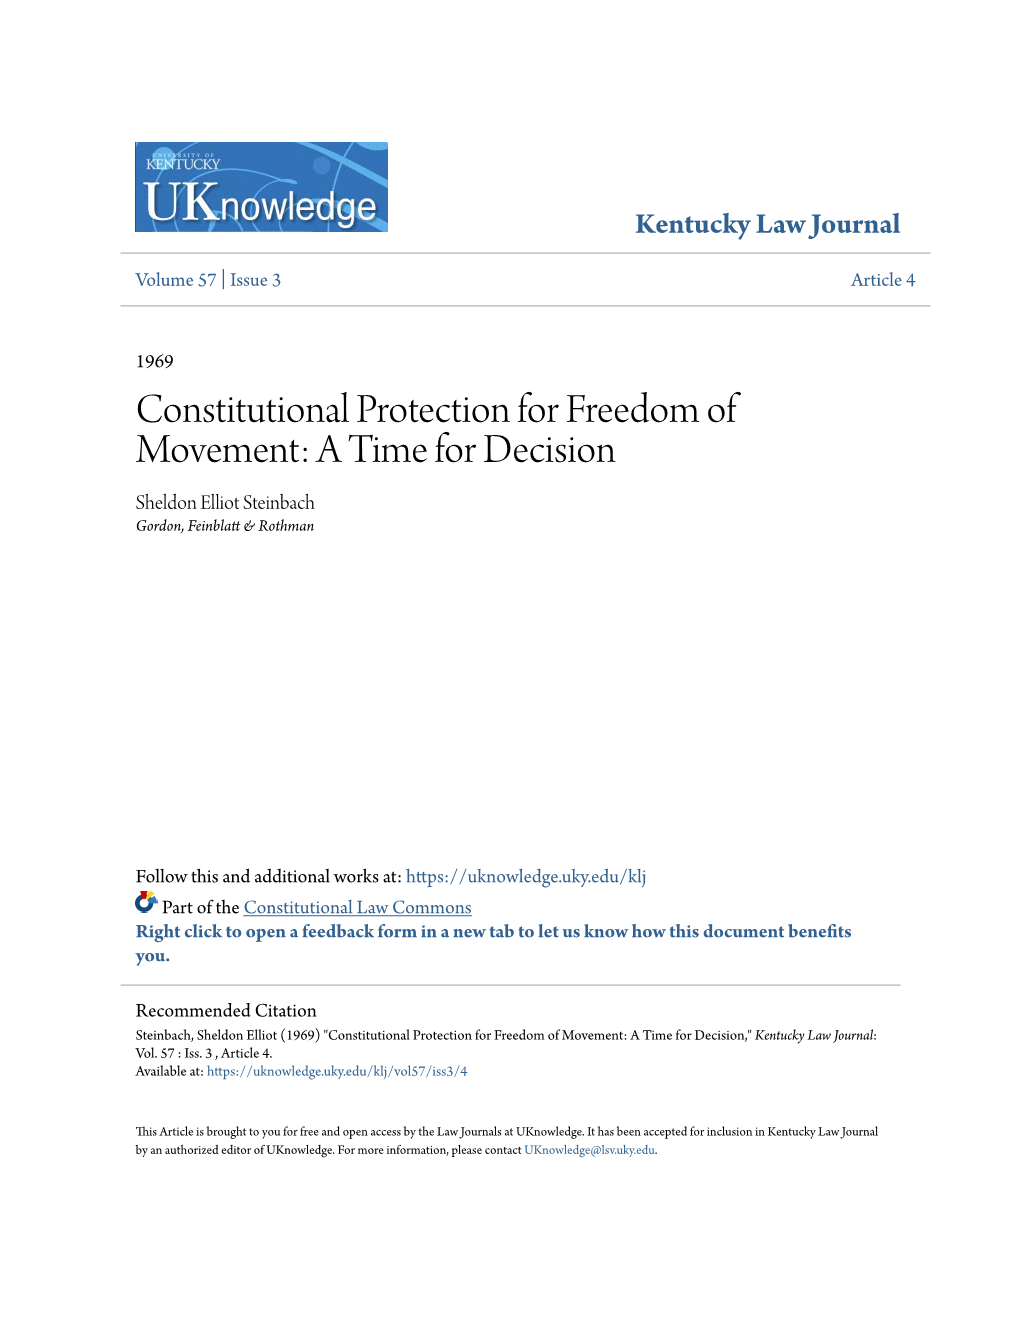 Constitutional Protection for Freedom of Movement: a Time for Decision Sheldon Elliot Steinbach Gordon, Feinblatt & Rothman